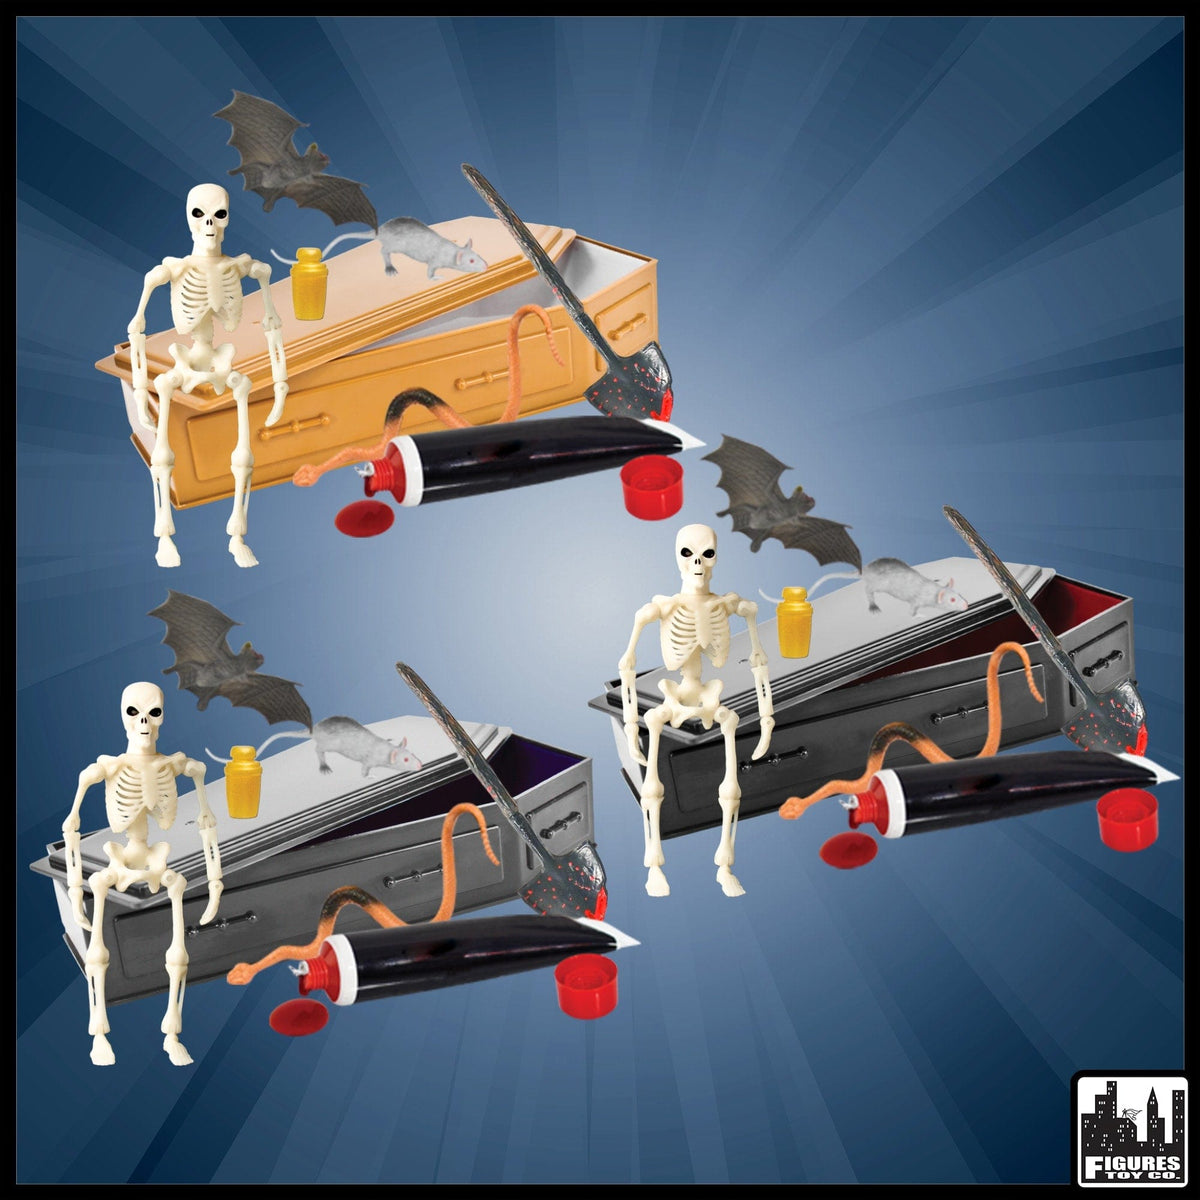 Set of all 3 ULTIMATE Coffin Casket Playset for WWE Wrestling Action Figures